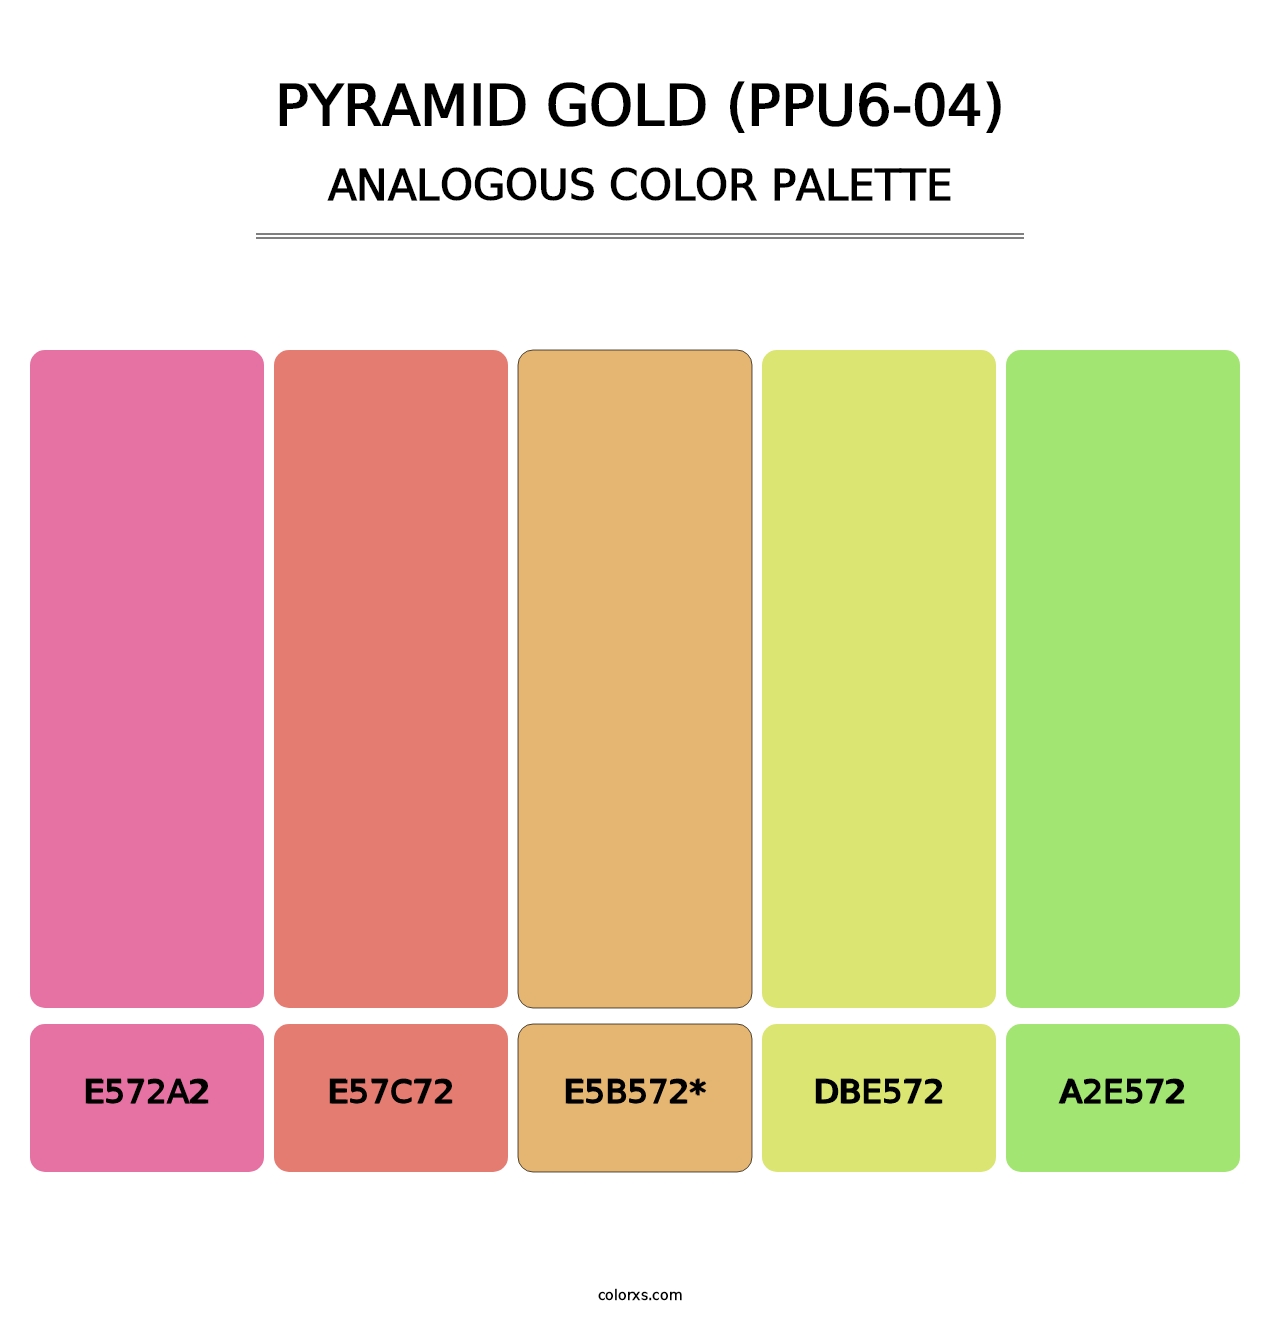 Pyramid Gold (PPU6-04) - Analogous Color Palette